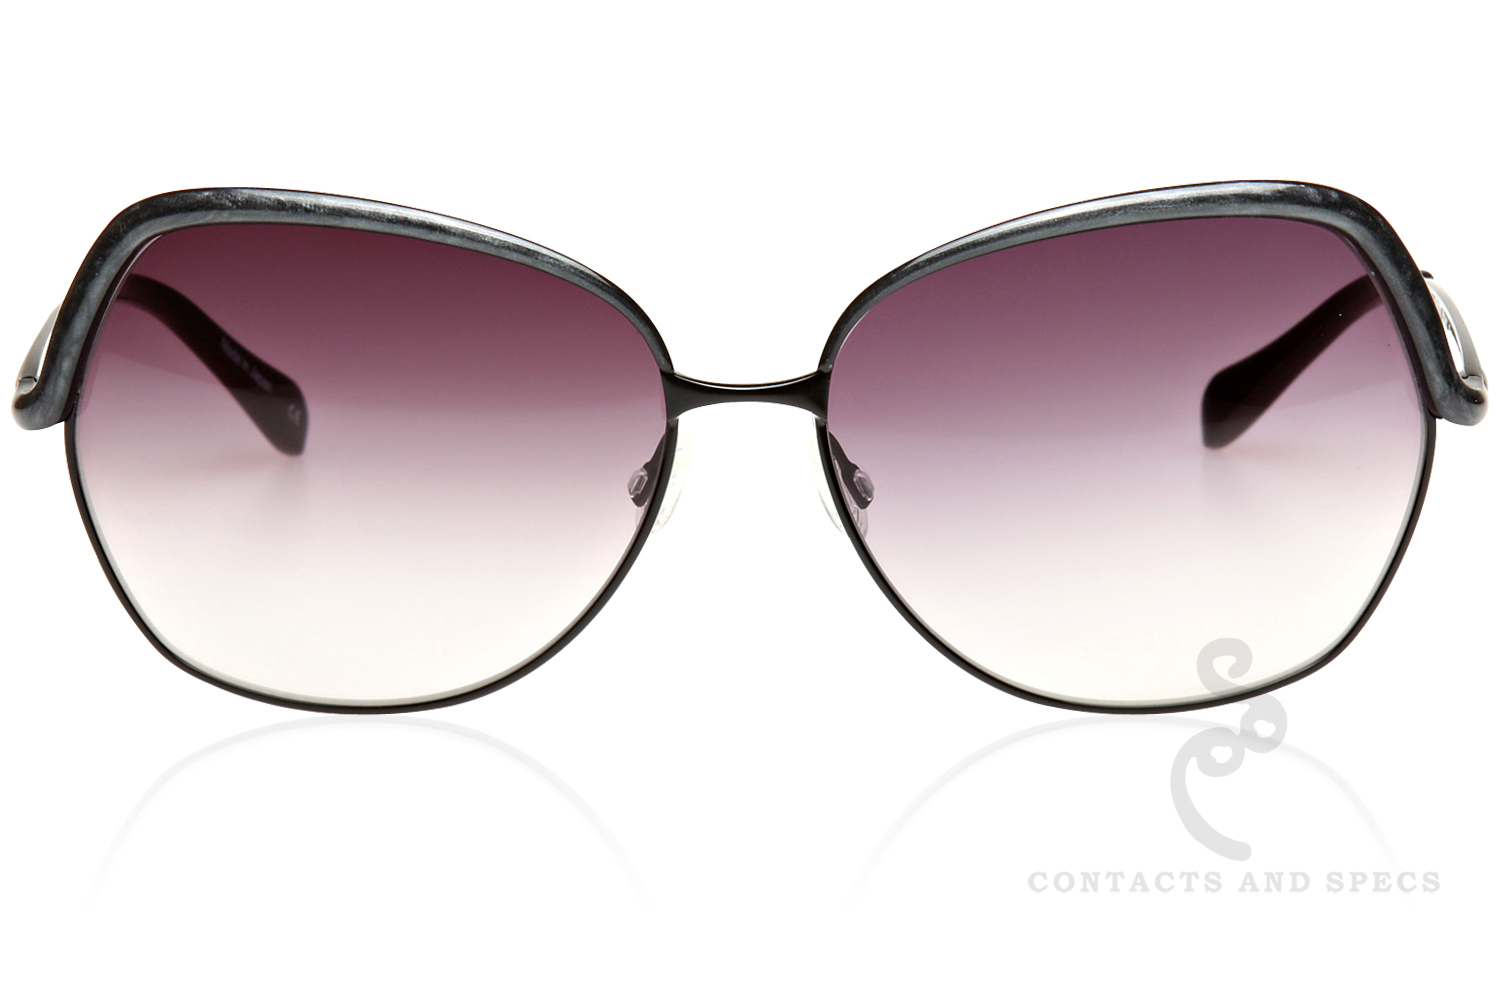 Oliver Peoples Sunglasses Sacha, Designer Oliver Peoples Sunglasses